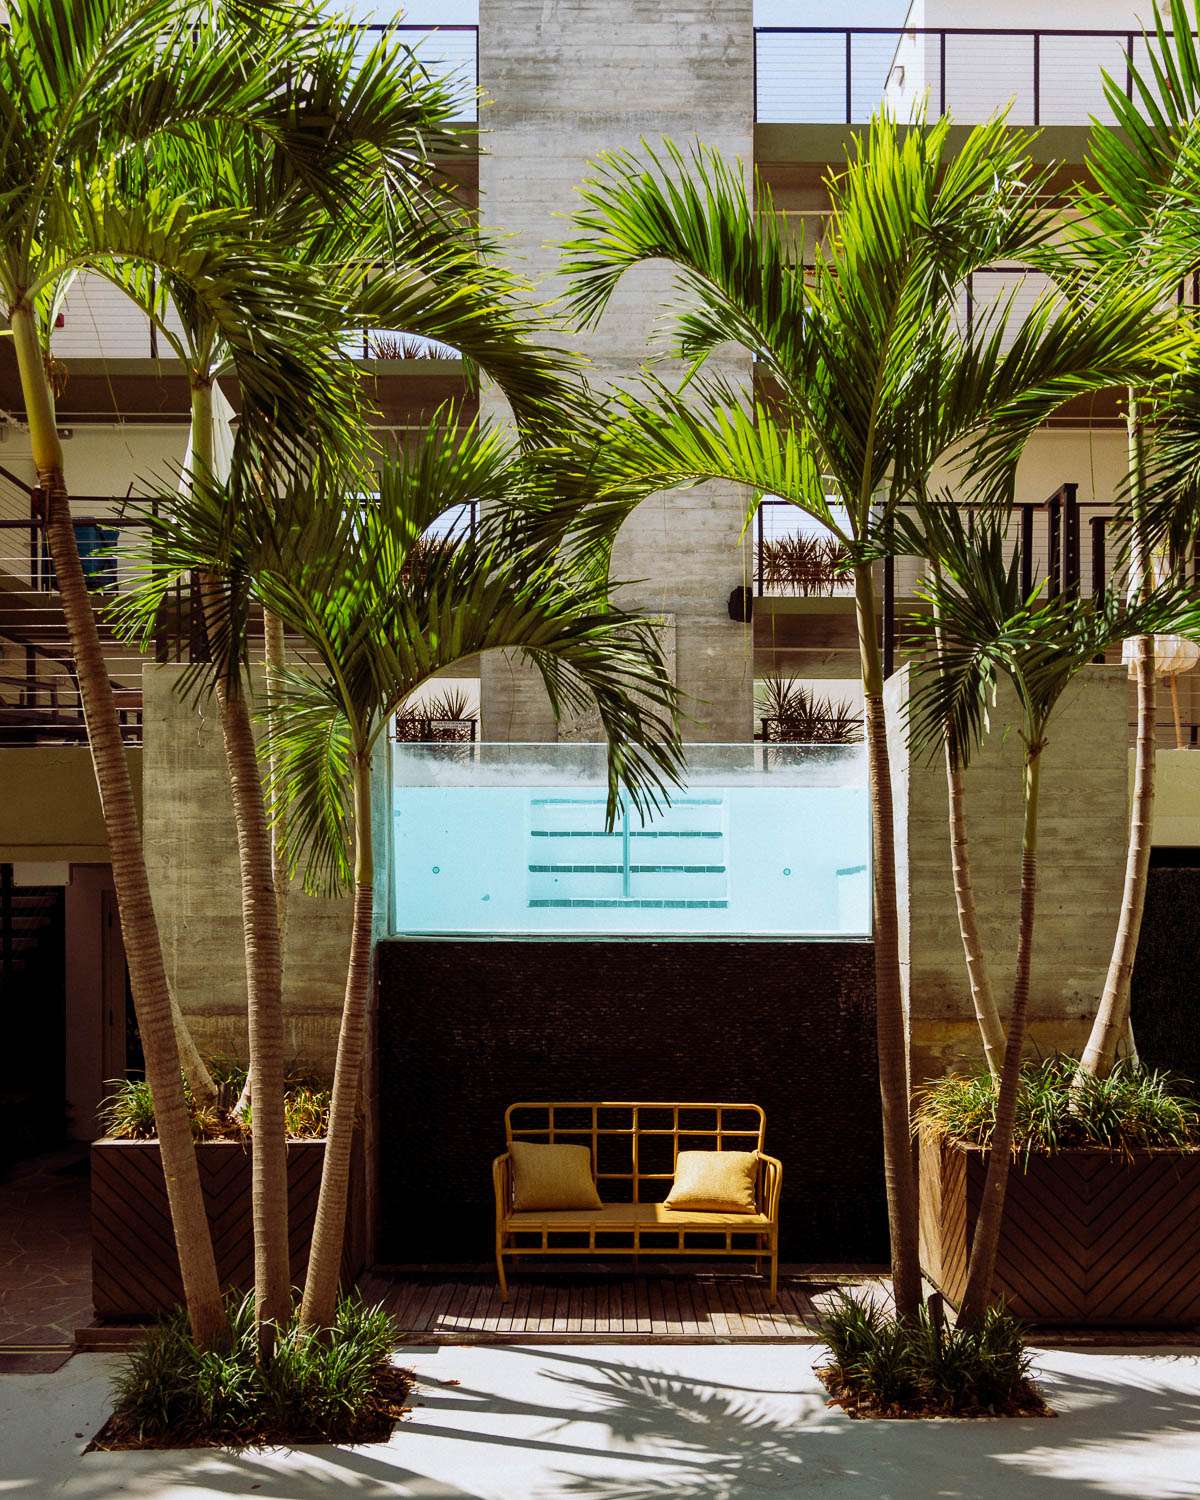 Rachel Off Duty: The Balfour Hotel Pool in Miami